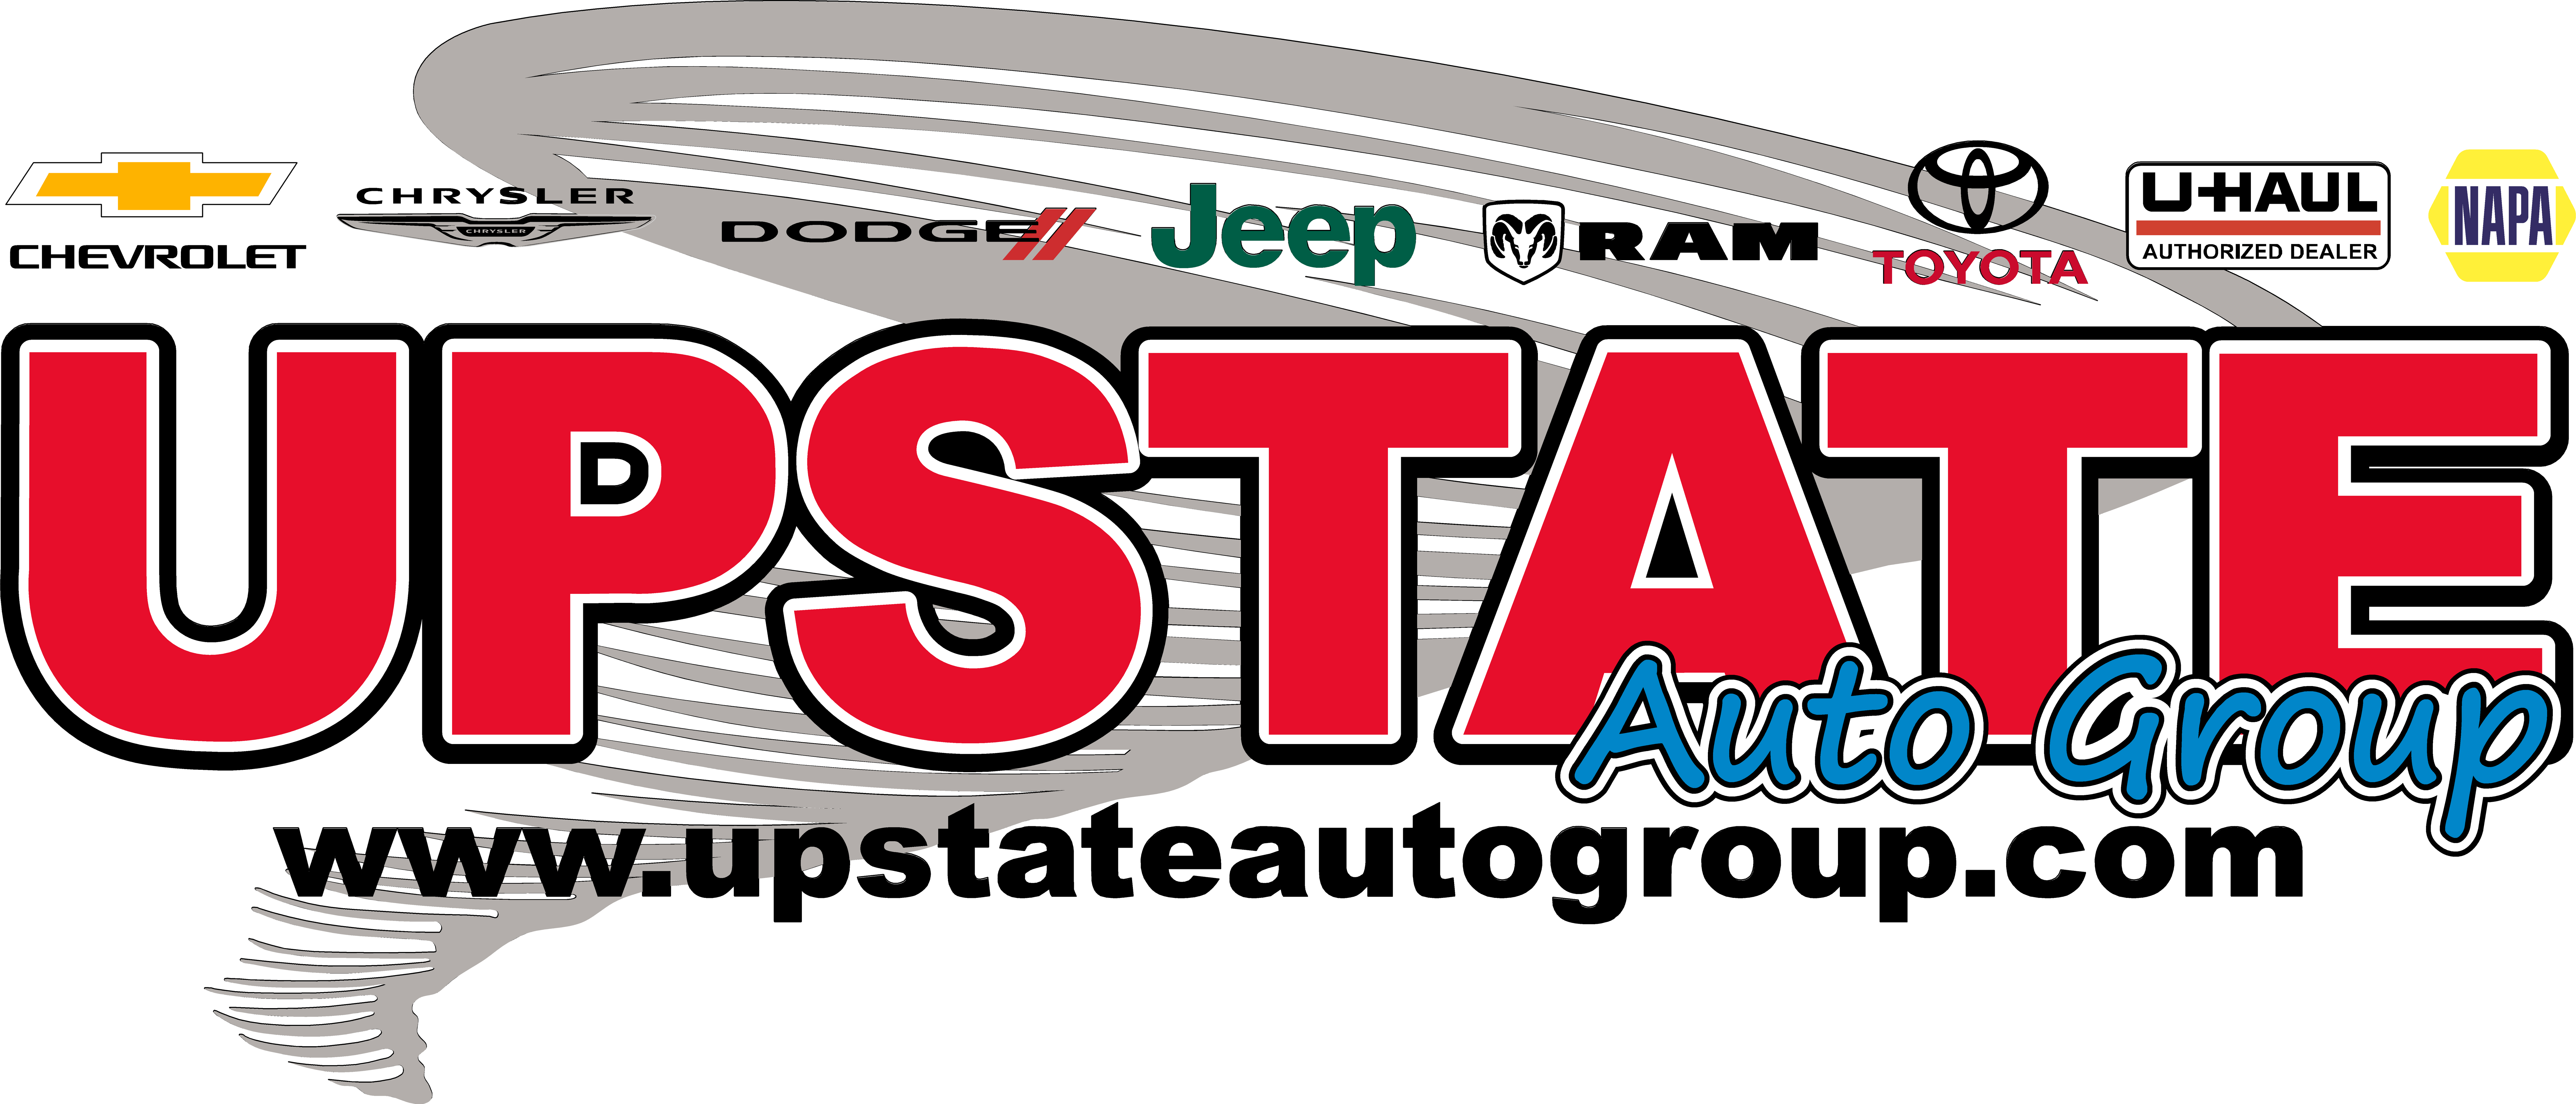 Upstate Automotive Group